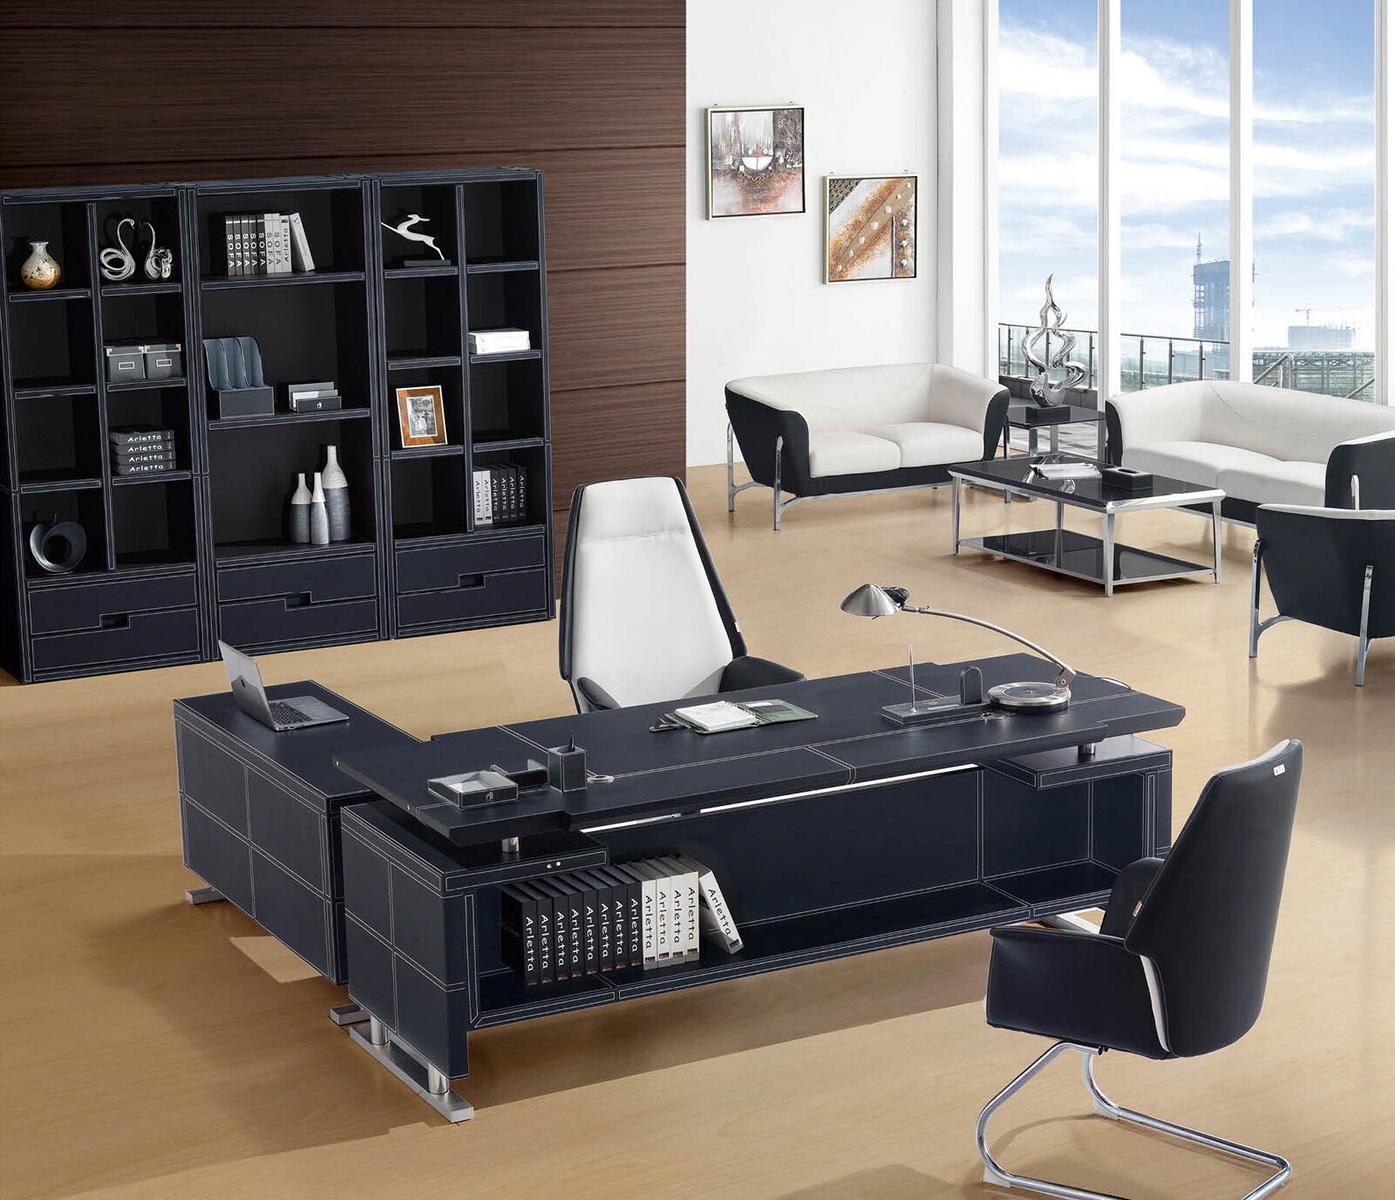 Design luxury furniture office set corner desk filing cabinet cupboards 2 pieces. table